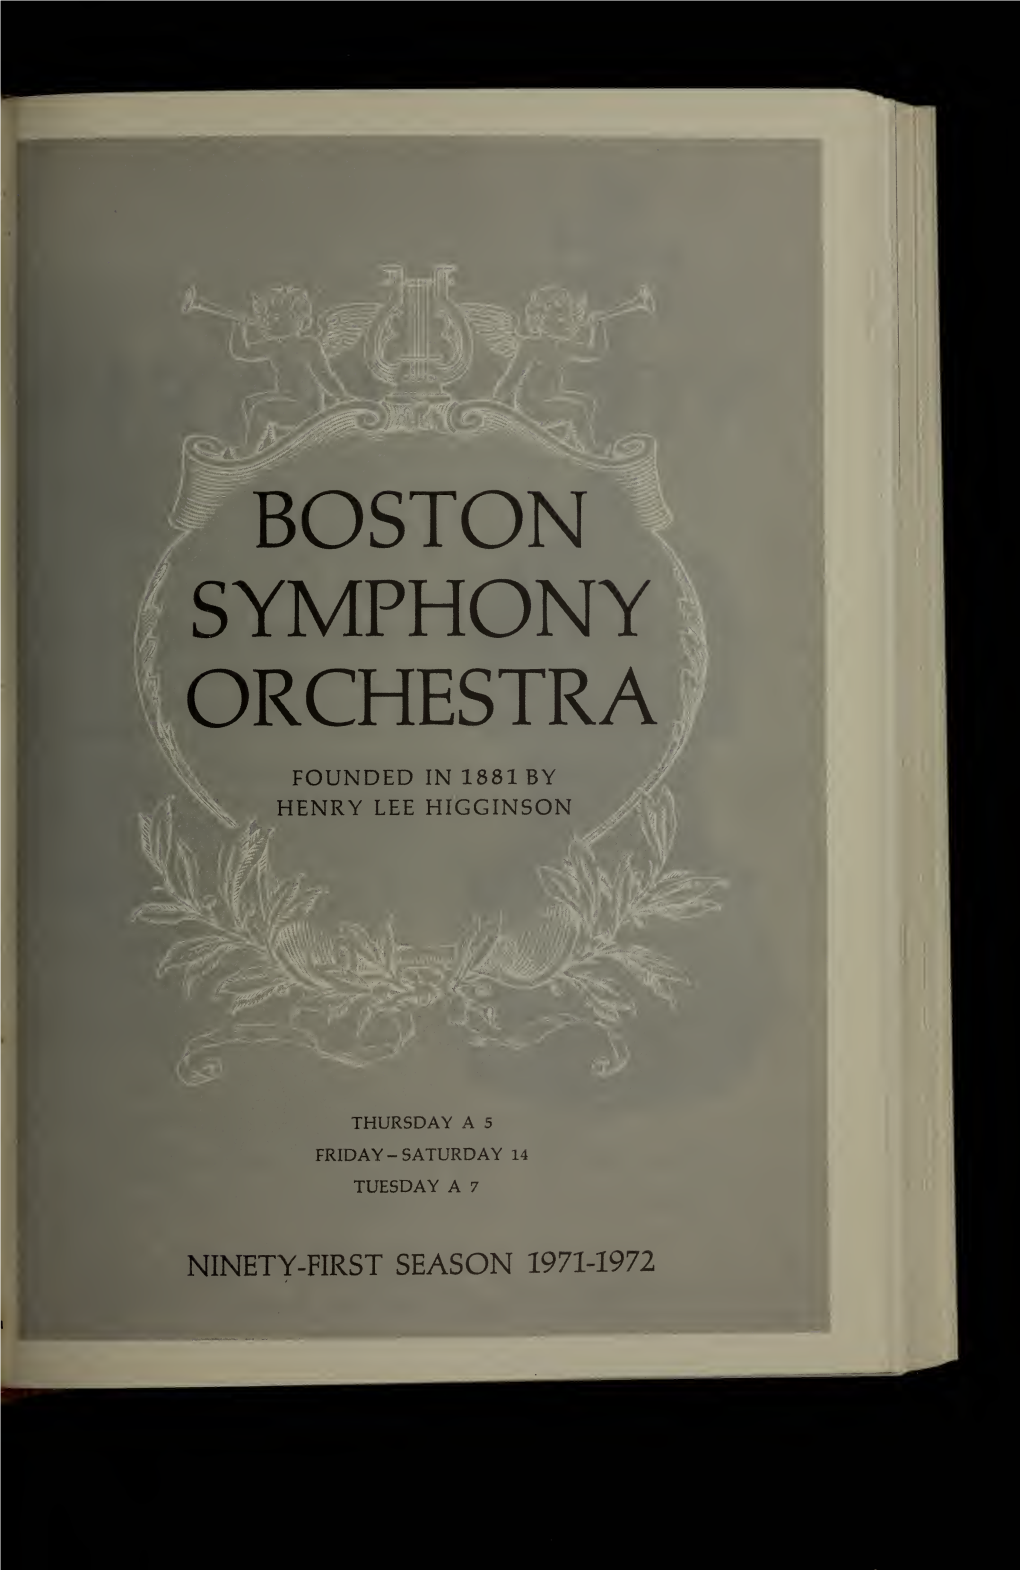 Boston Symphony Orchestra Concert Programs, Season 91, 1971-1972, Subscription